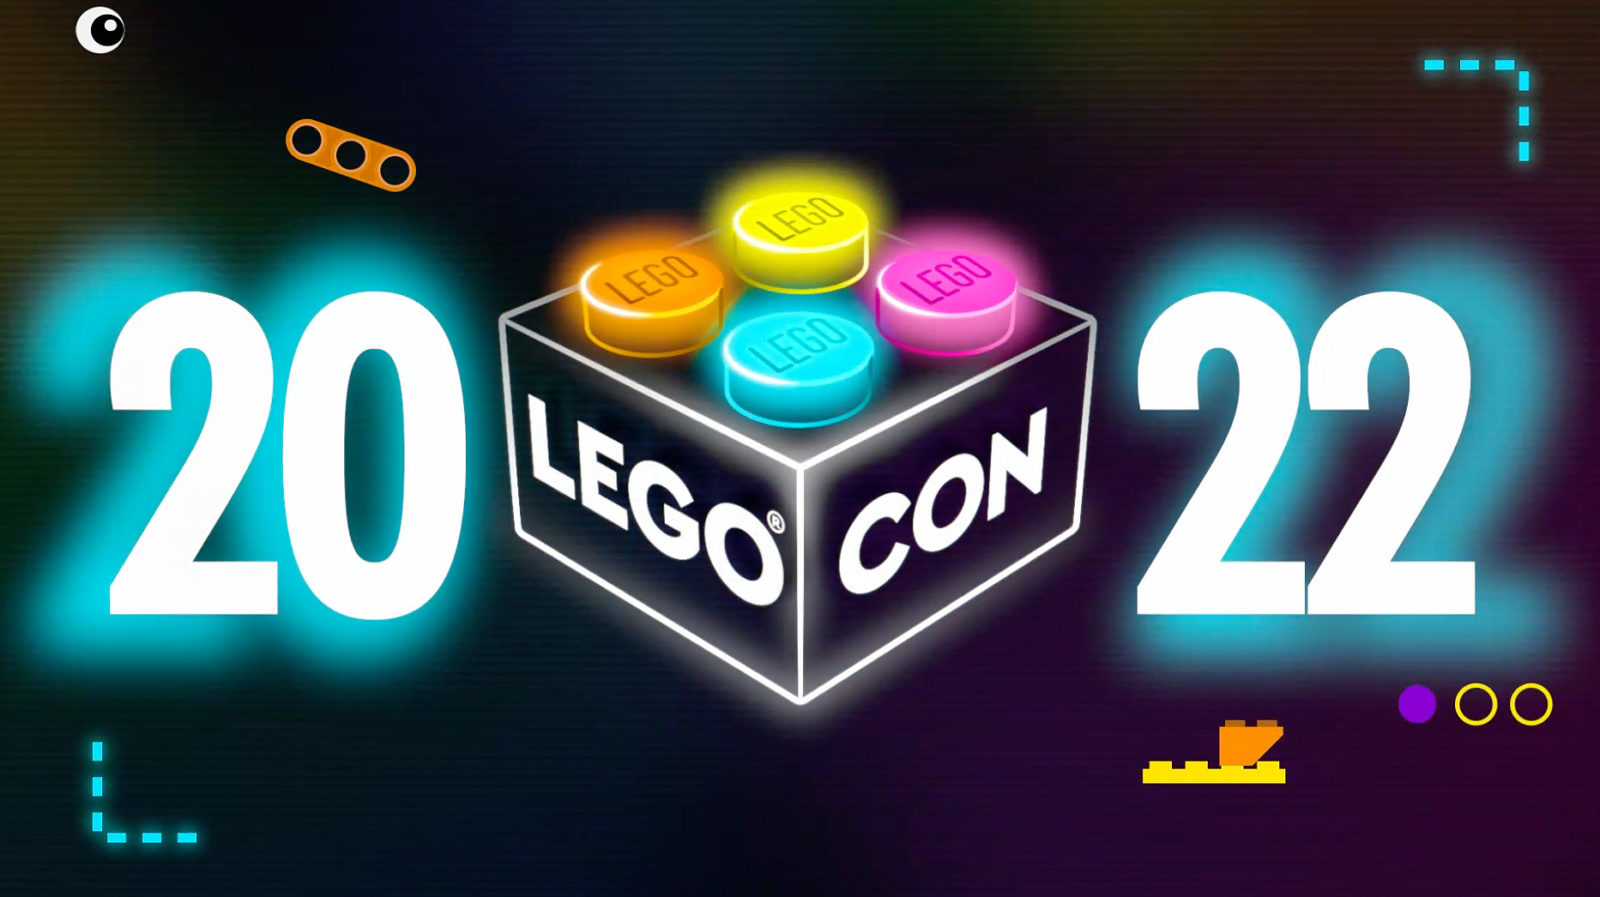 LEGO CON 2022: LEGO netráðstefnan kemur aftur 18. júní 2022